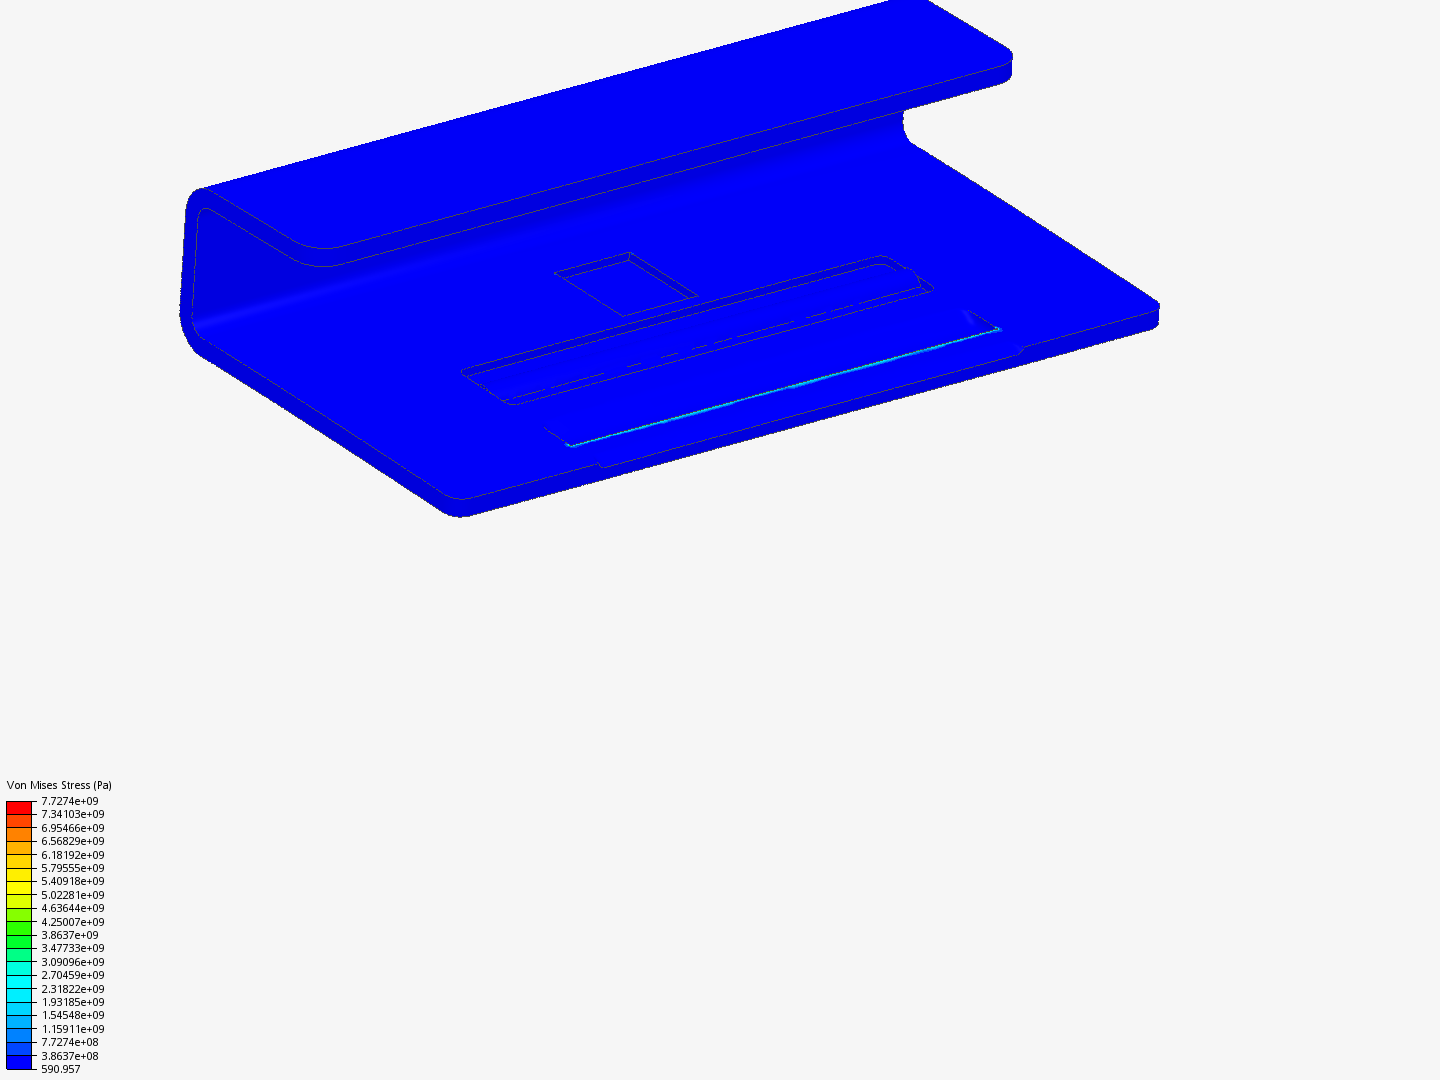 U-shaped sheet metal deflection image